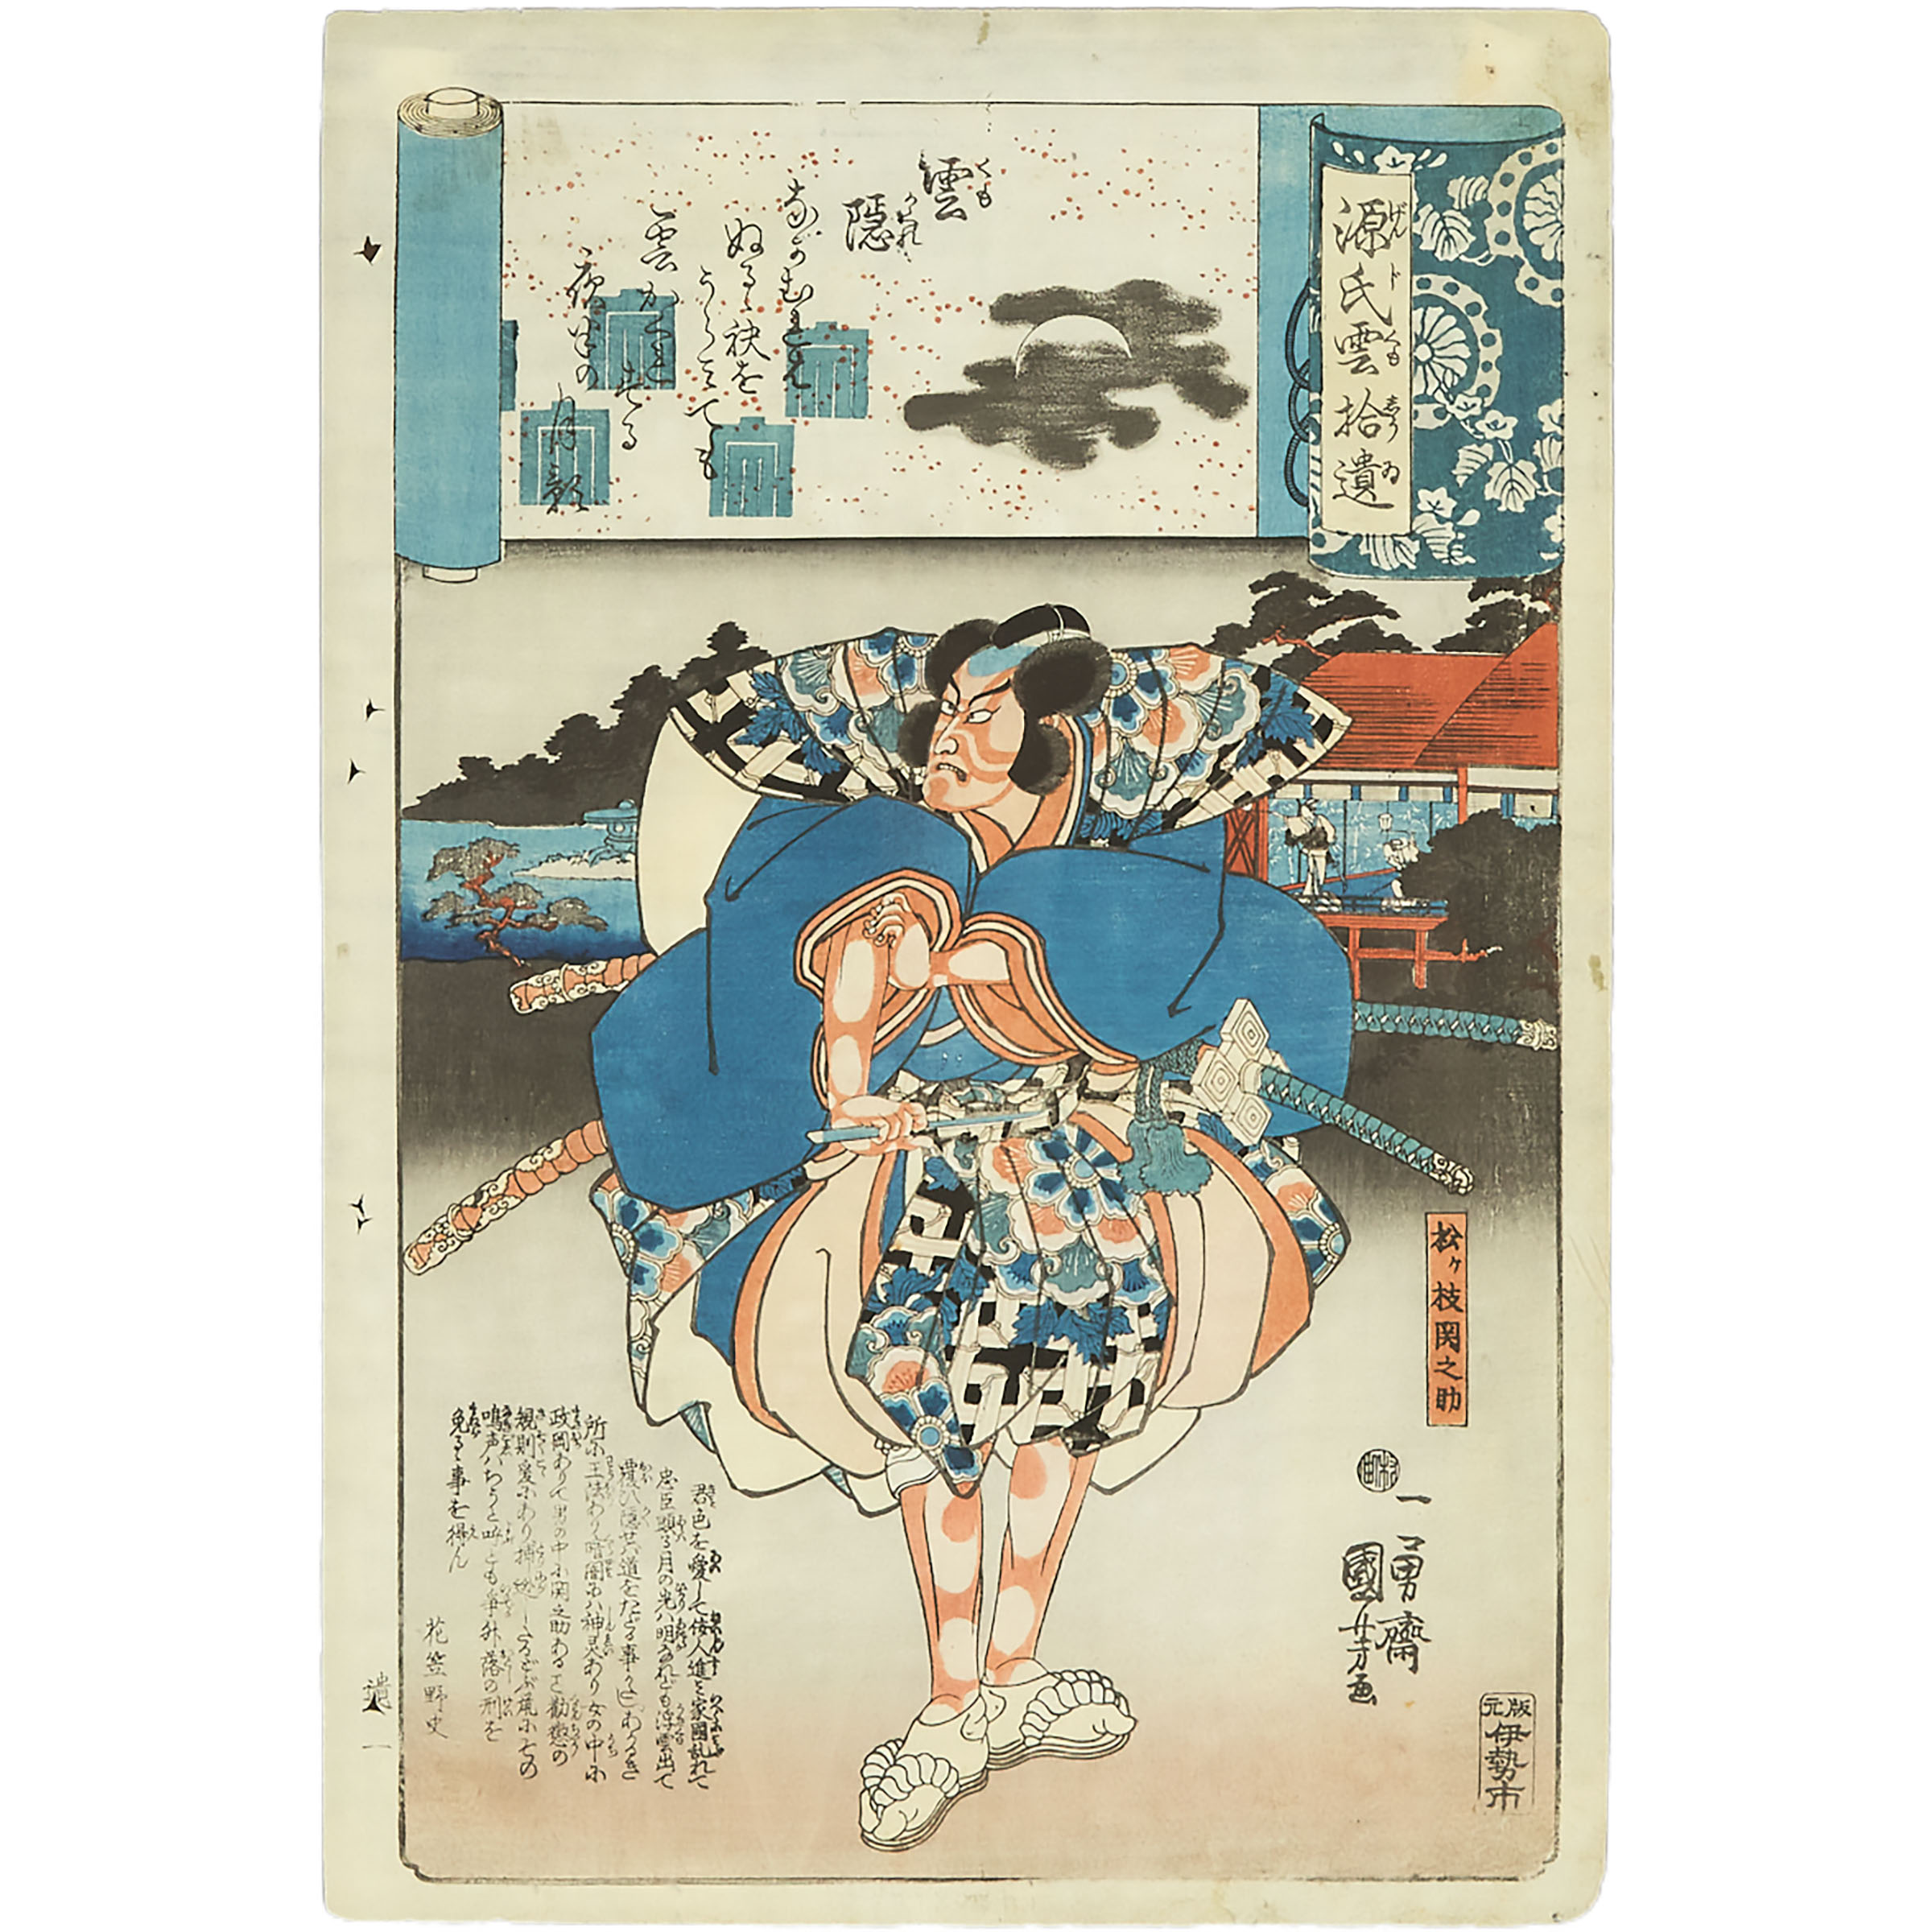 Utagawa Kuniyoshi (1798-1861), Two Prints from the Cloudy Genji Series, Circa 1845-1861